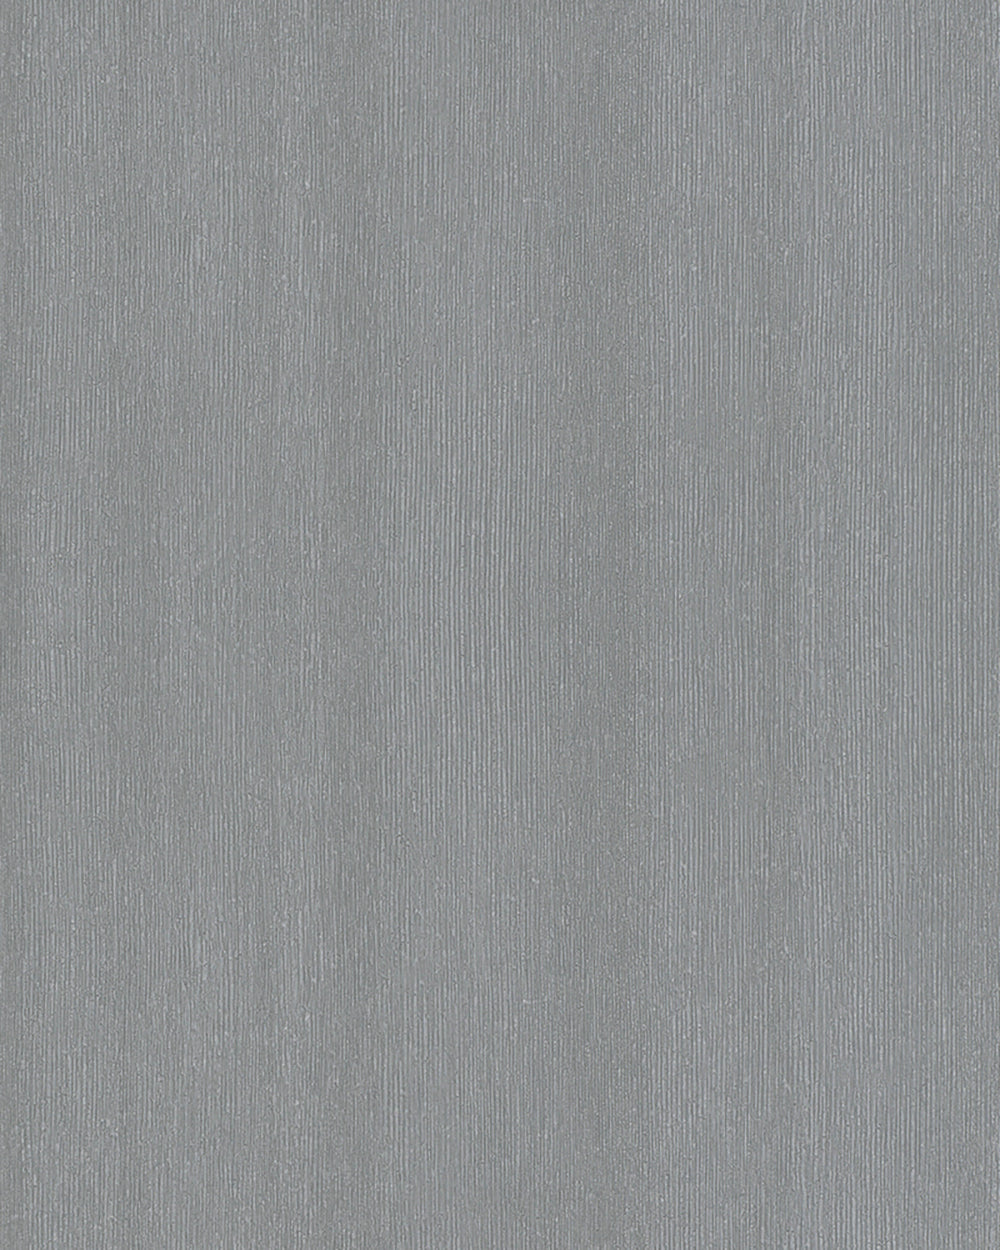 Avalon - Wood Grain plain wallpaper Marburg Roll Dark Grey  31637